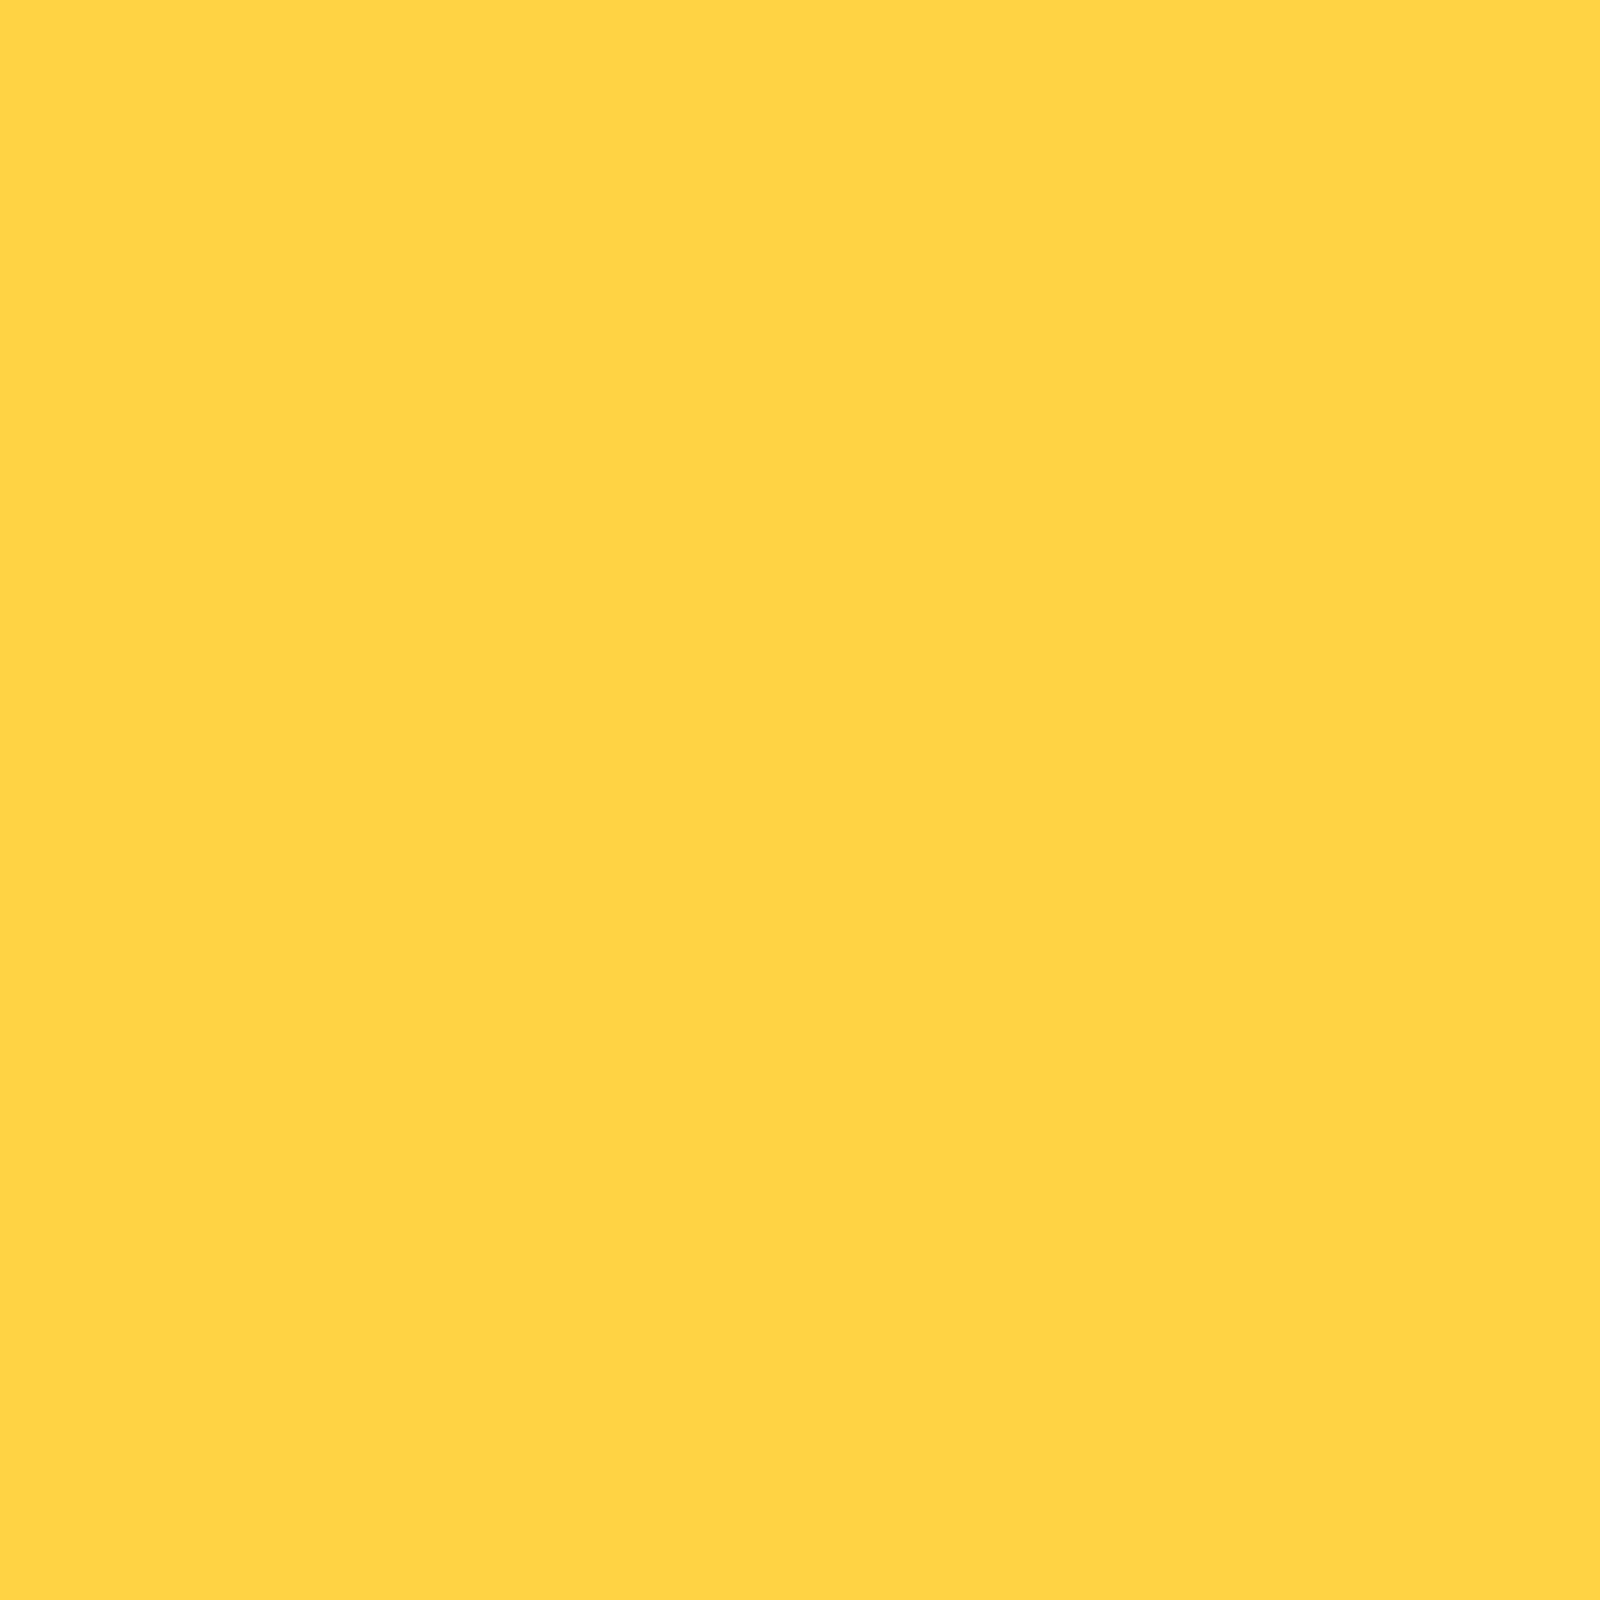 Papel Color Plus - Amarelo - Rio de Janeiro (10UN)